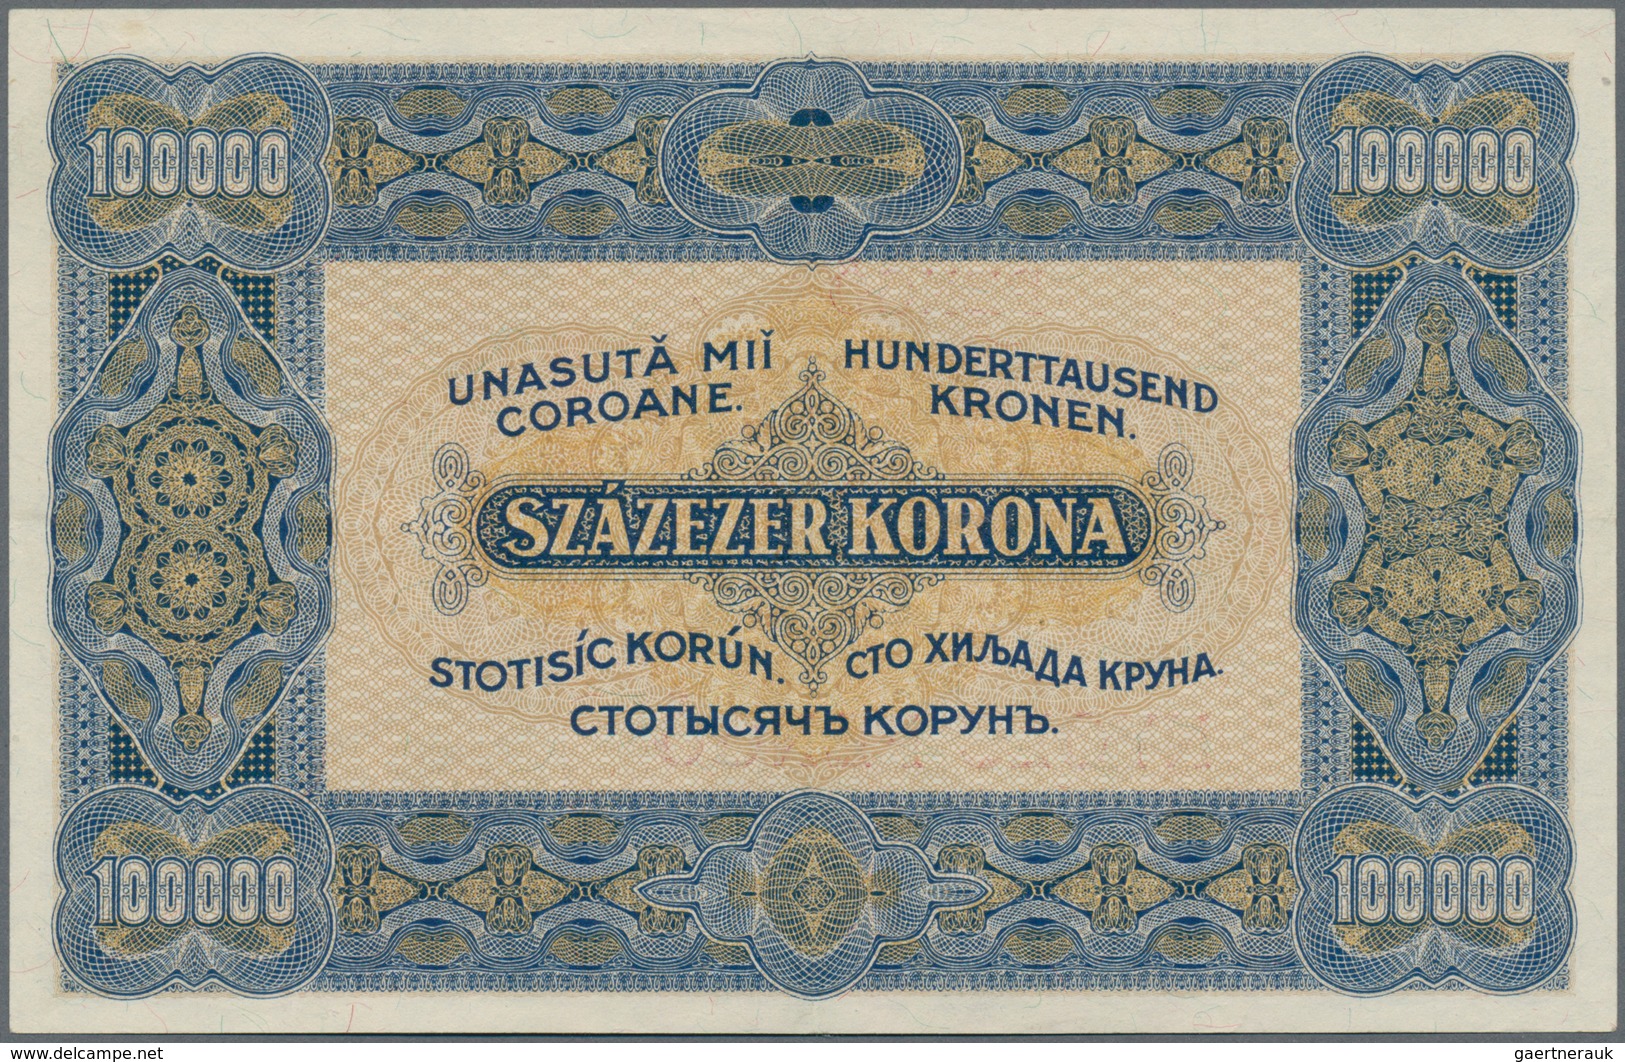 Hungary / Ungarn: Ministry Of Finance 8 Pengö Overprint On 100.000 Korona ND(1925), P.86a, Excellent - Ungarn